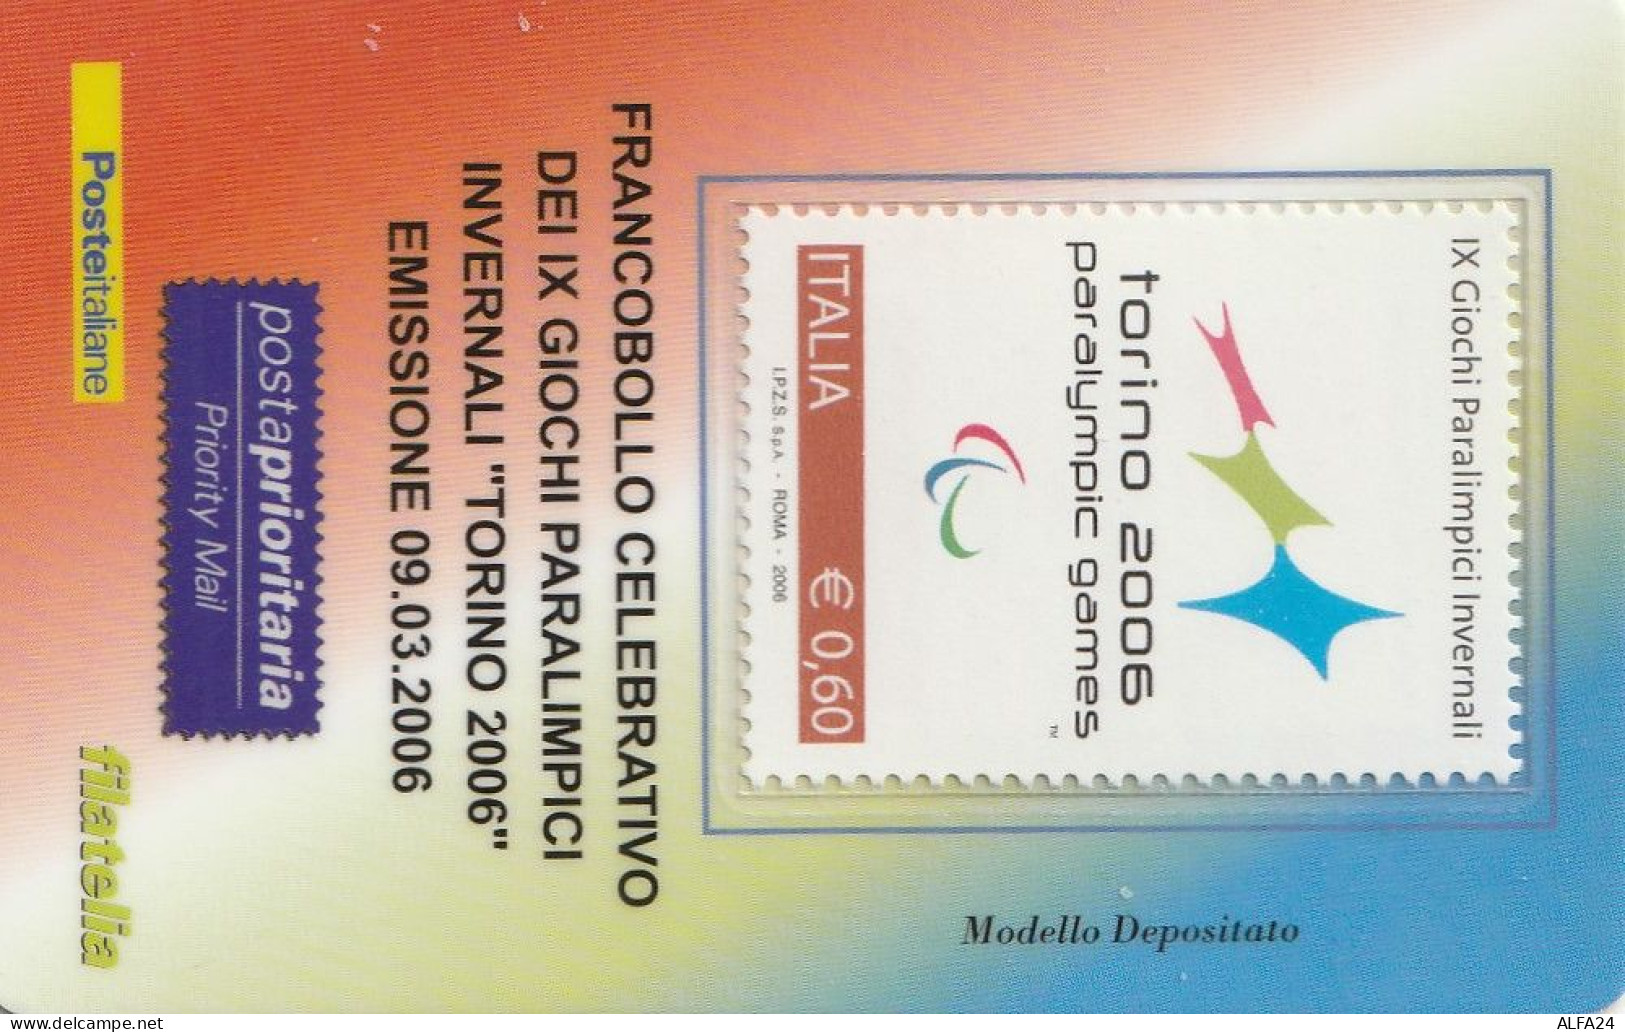 TESSERA FILATELICA VALORE 0,6 EURO TORINO 2006 (TF1144 - Philatelic Cards